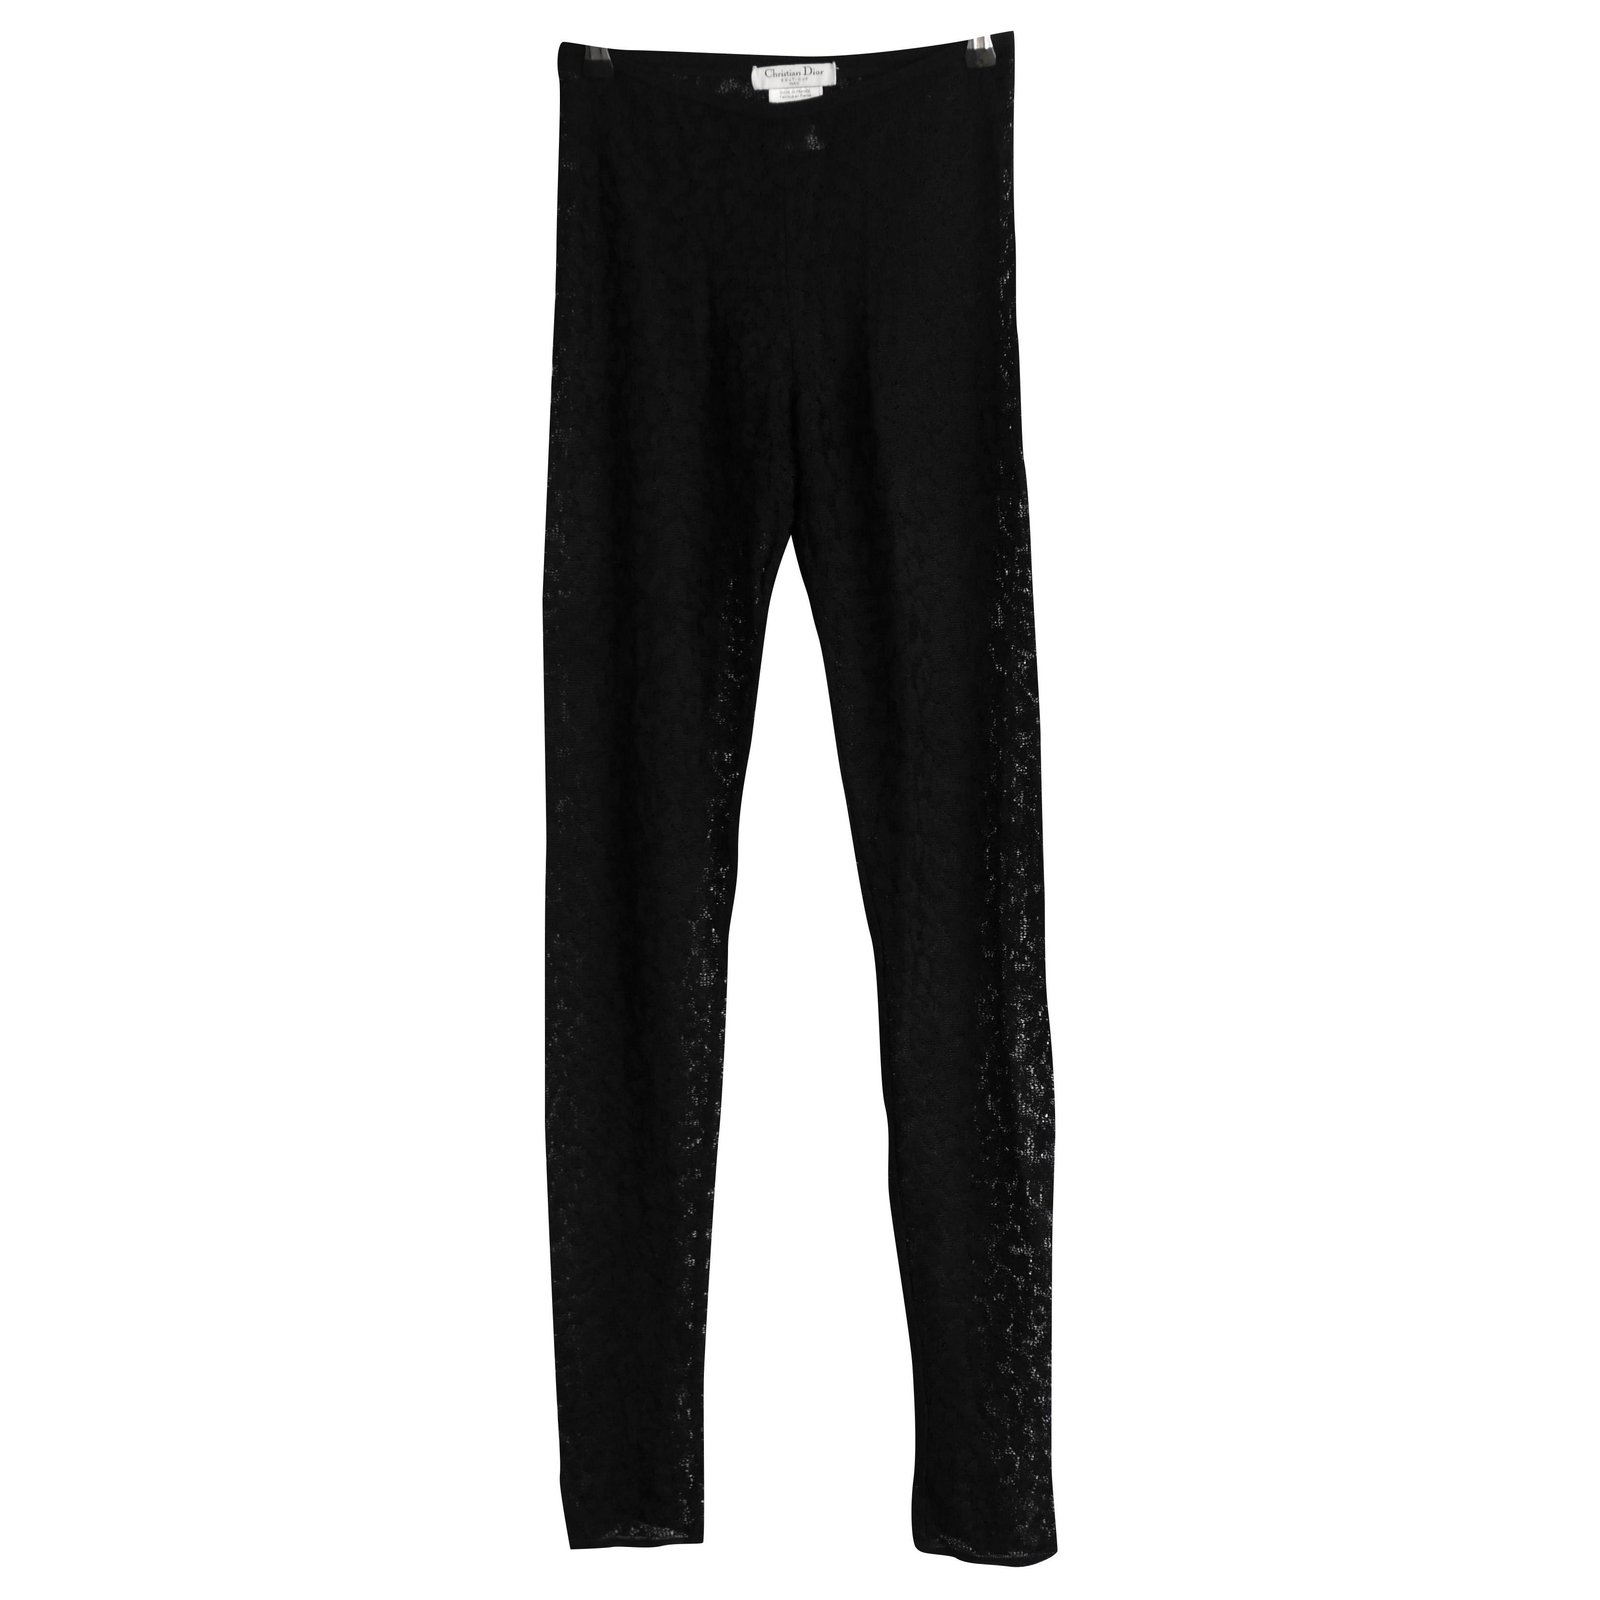 https://cdn1.jolicloset.com/imgr/full/2020/08/212515-1/christian-dior-black-viscose-aw04-leopard-knit-leggings.jpg